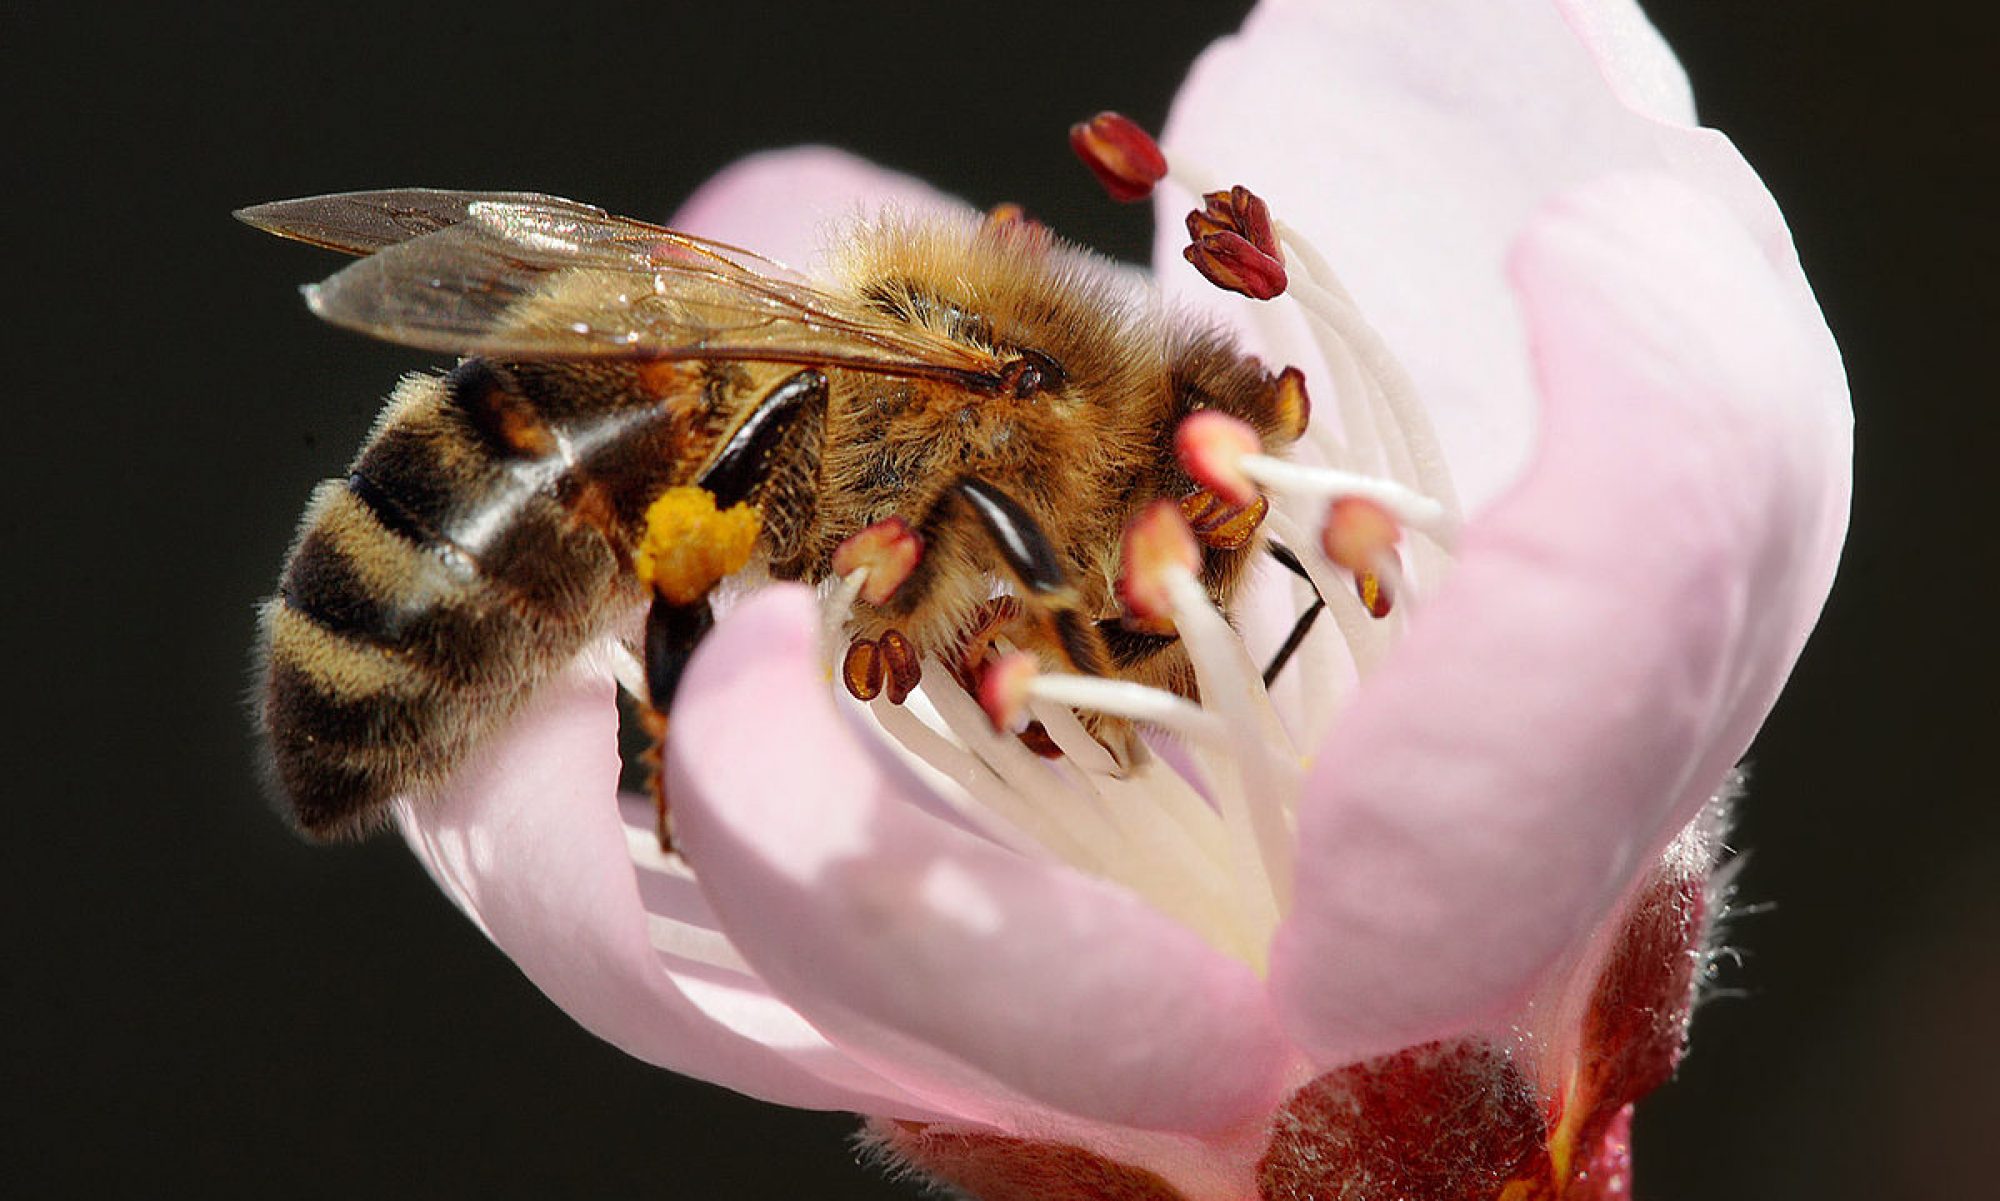 Bee Joy - Help Save the Bees